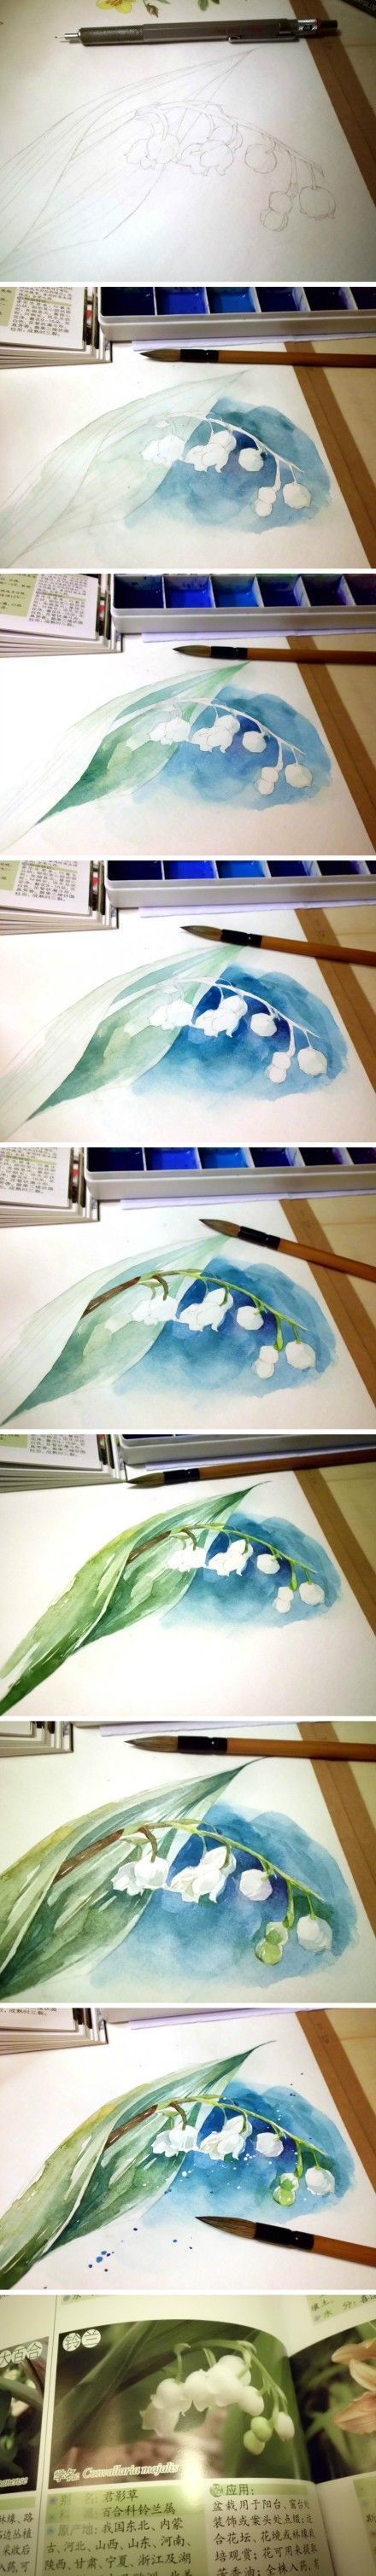 Watercolor paint drawing process